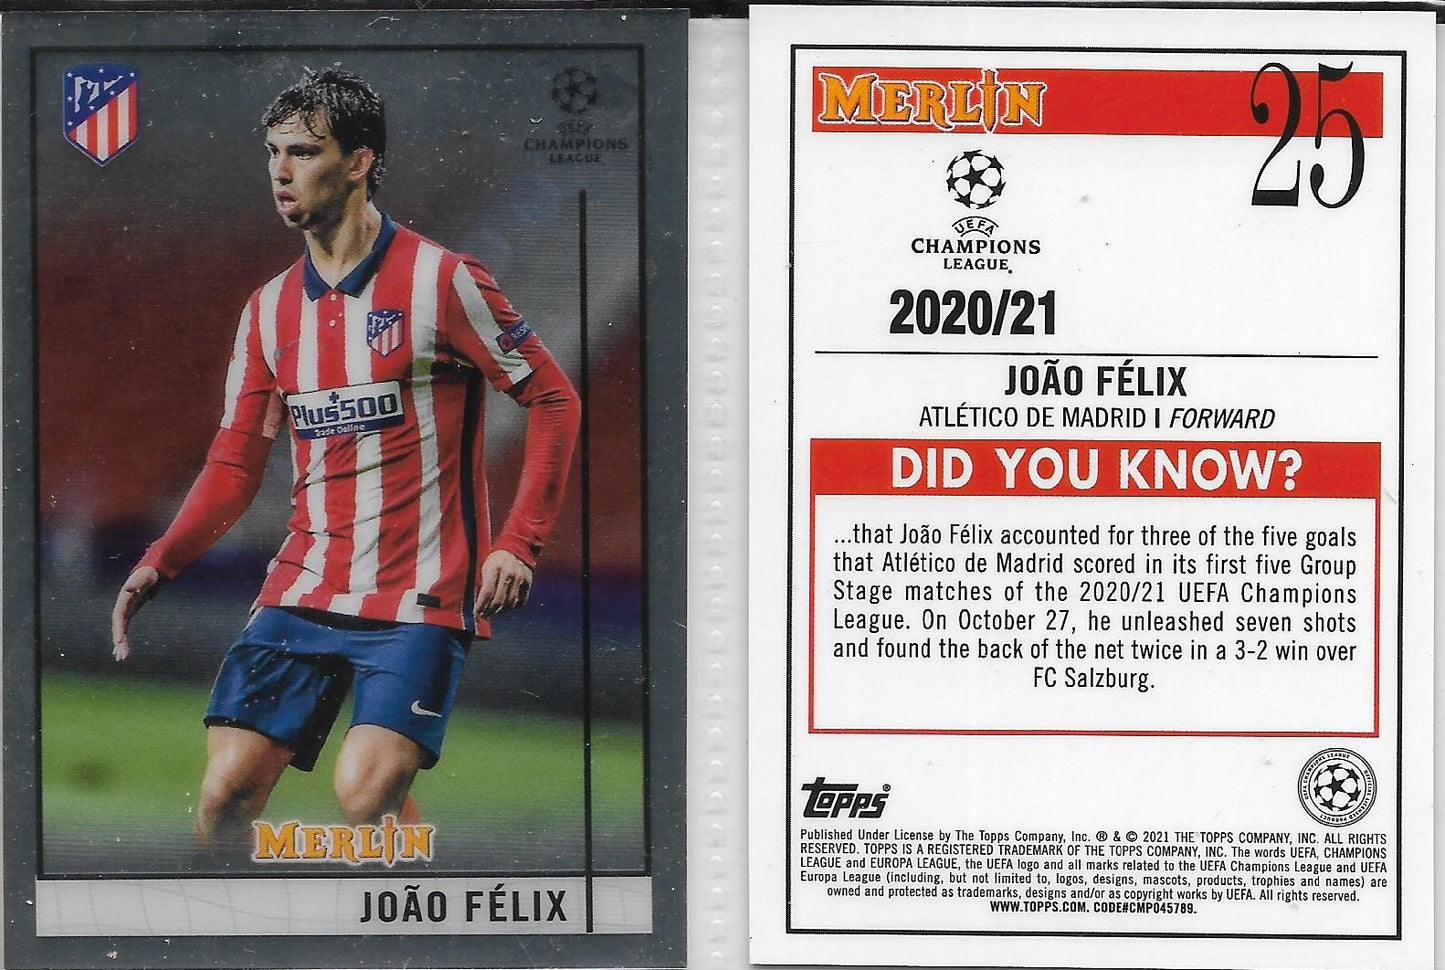 2020-21 Topps Chrome Merlin #25 UEFA JOAO FELIX -  ATLETICO DE MADRID -  PORTUGAL ROOKIE CARD